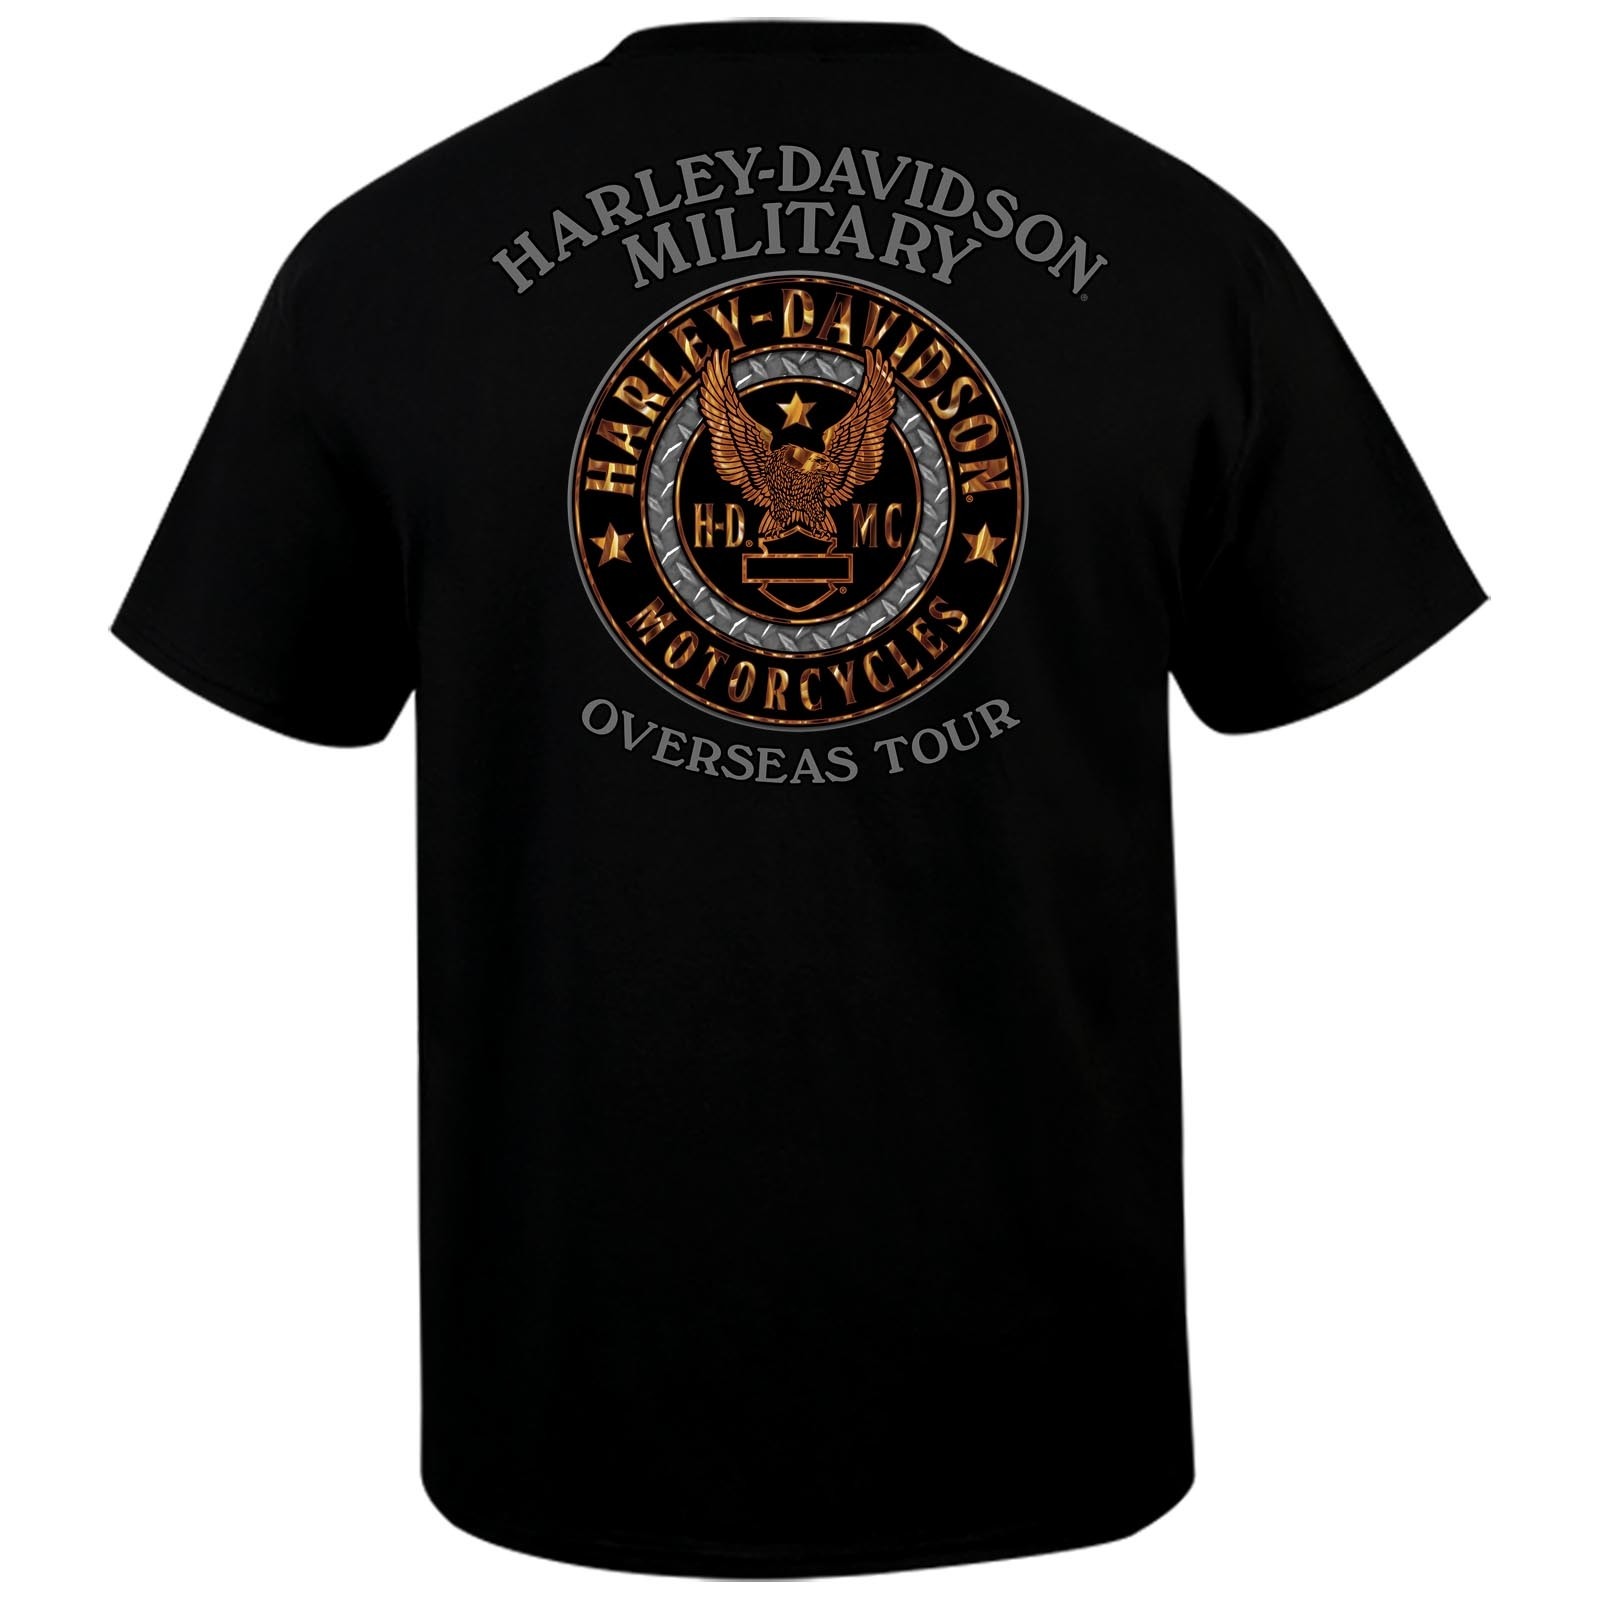  Harley  Davidson  Military  Men s Graphic T  shirt  Overseas 